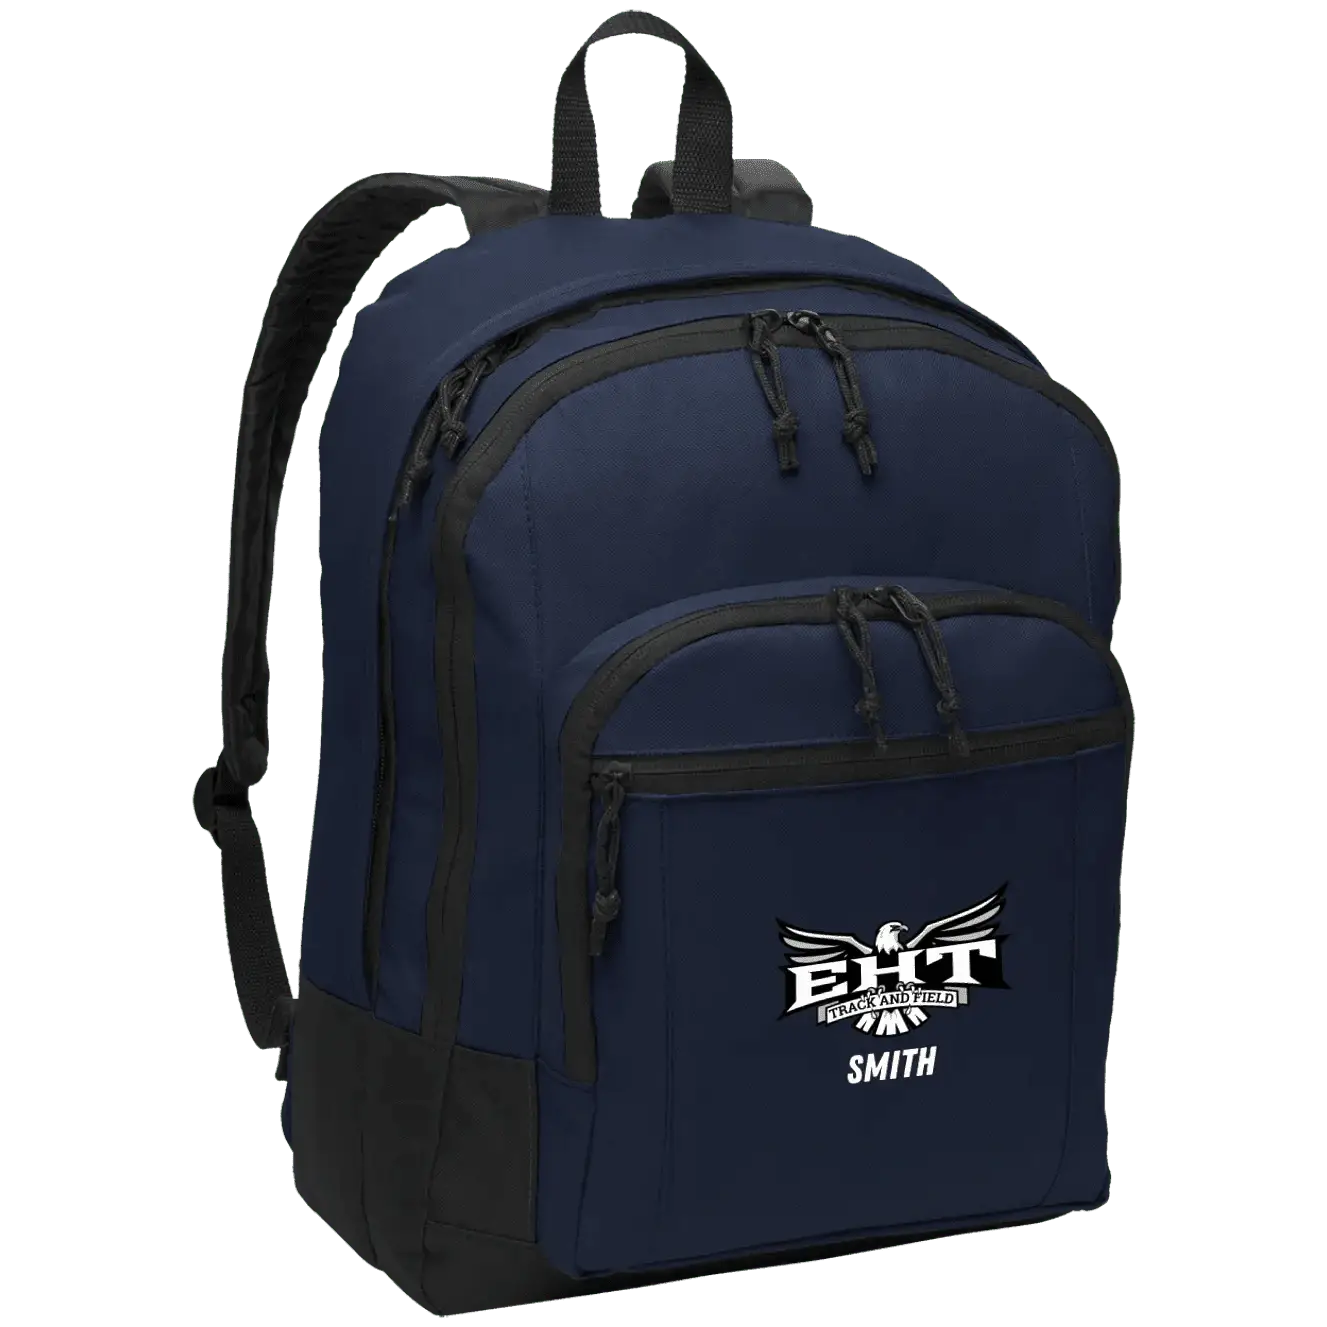 EHT Track & Field Bags